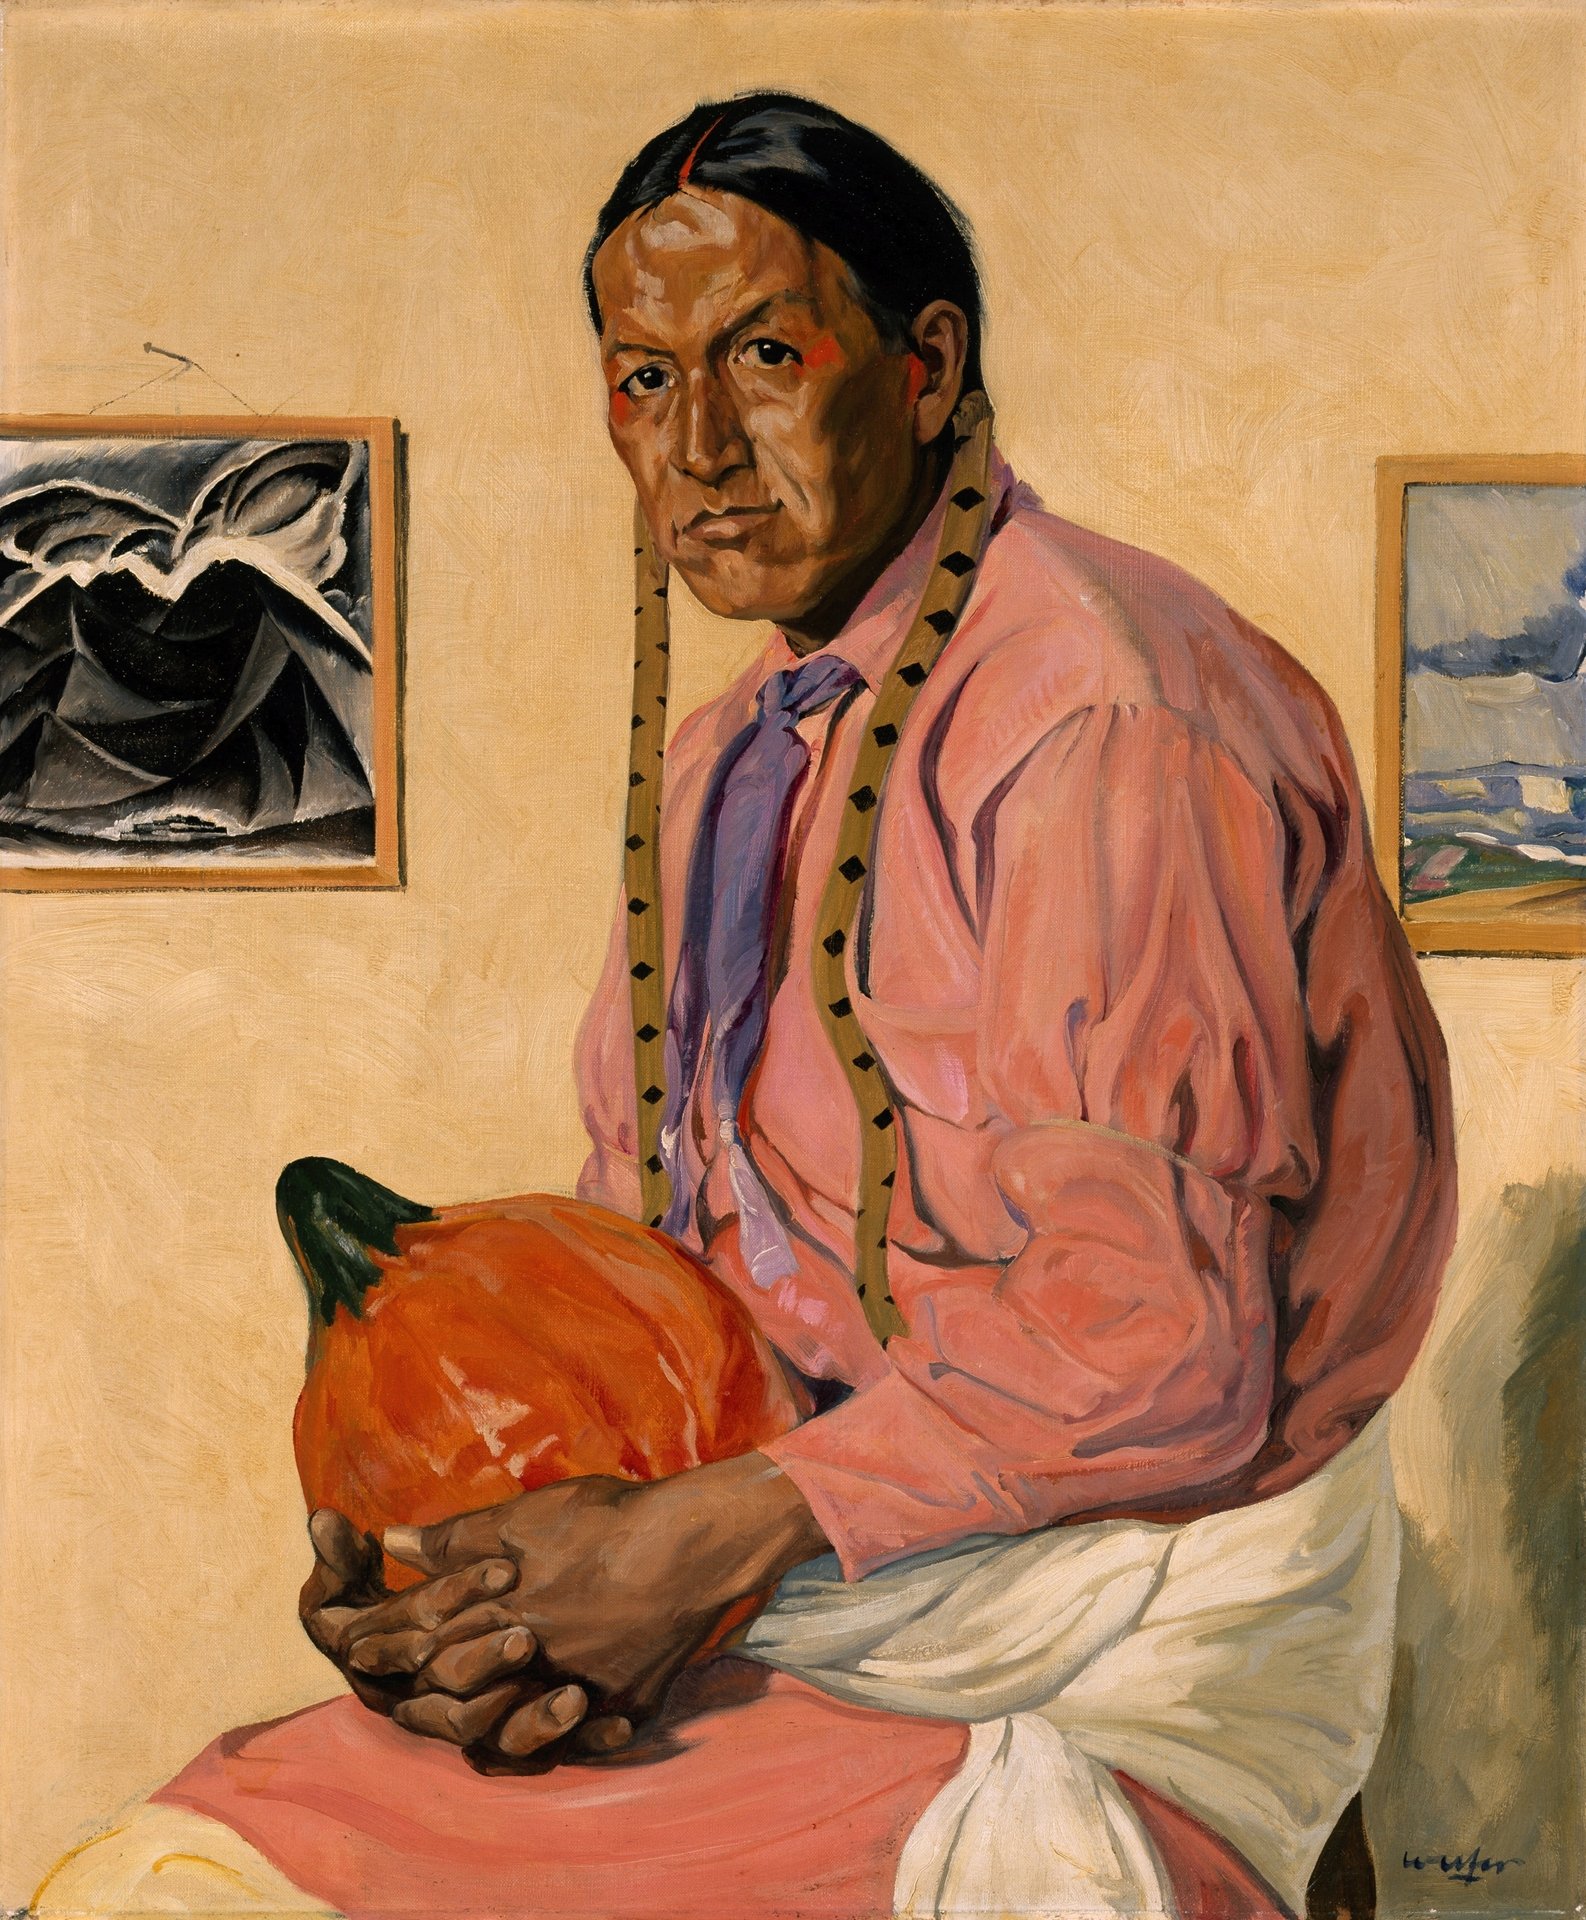 Portrait of a Man with a Pumpkin (1920s)